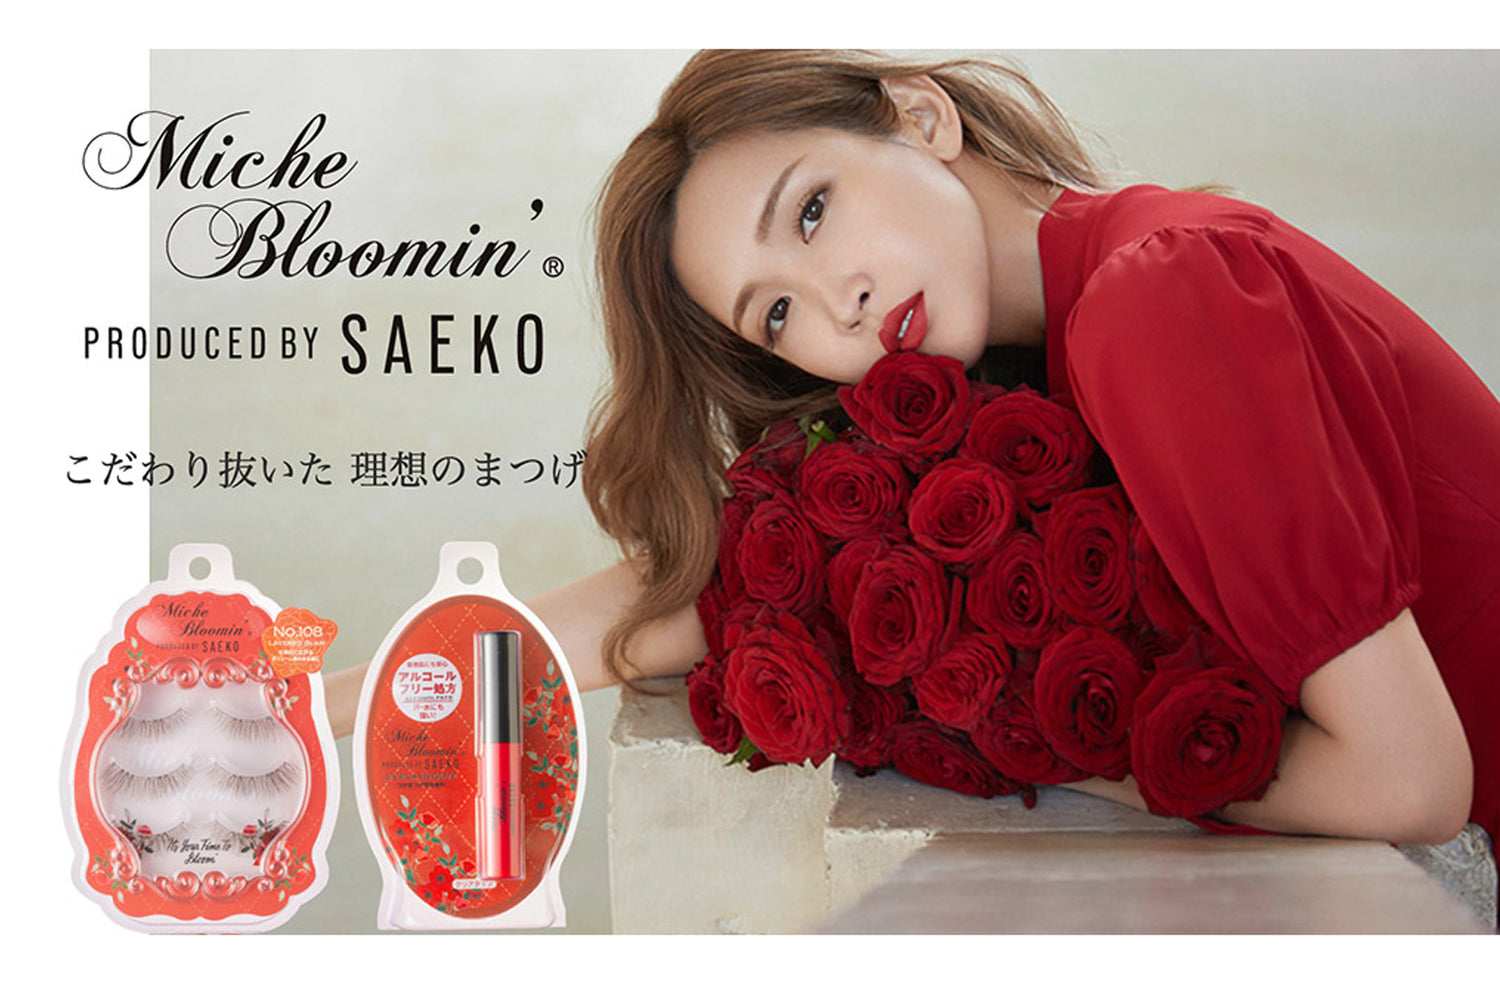 Miche Bloomin' By Saeko